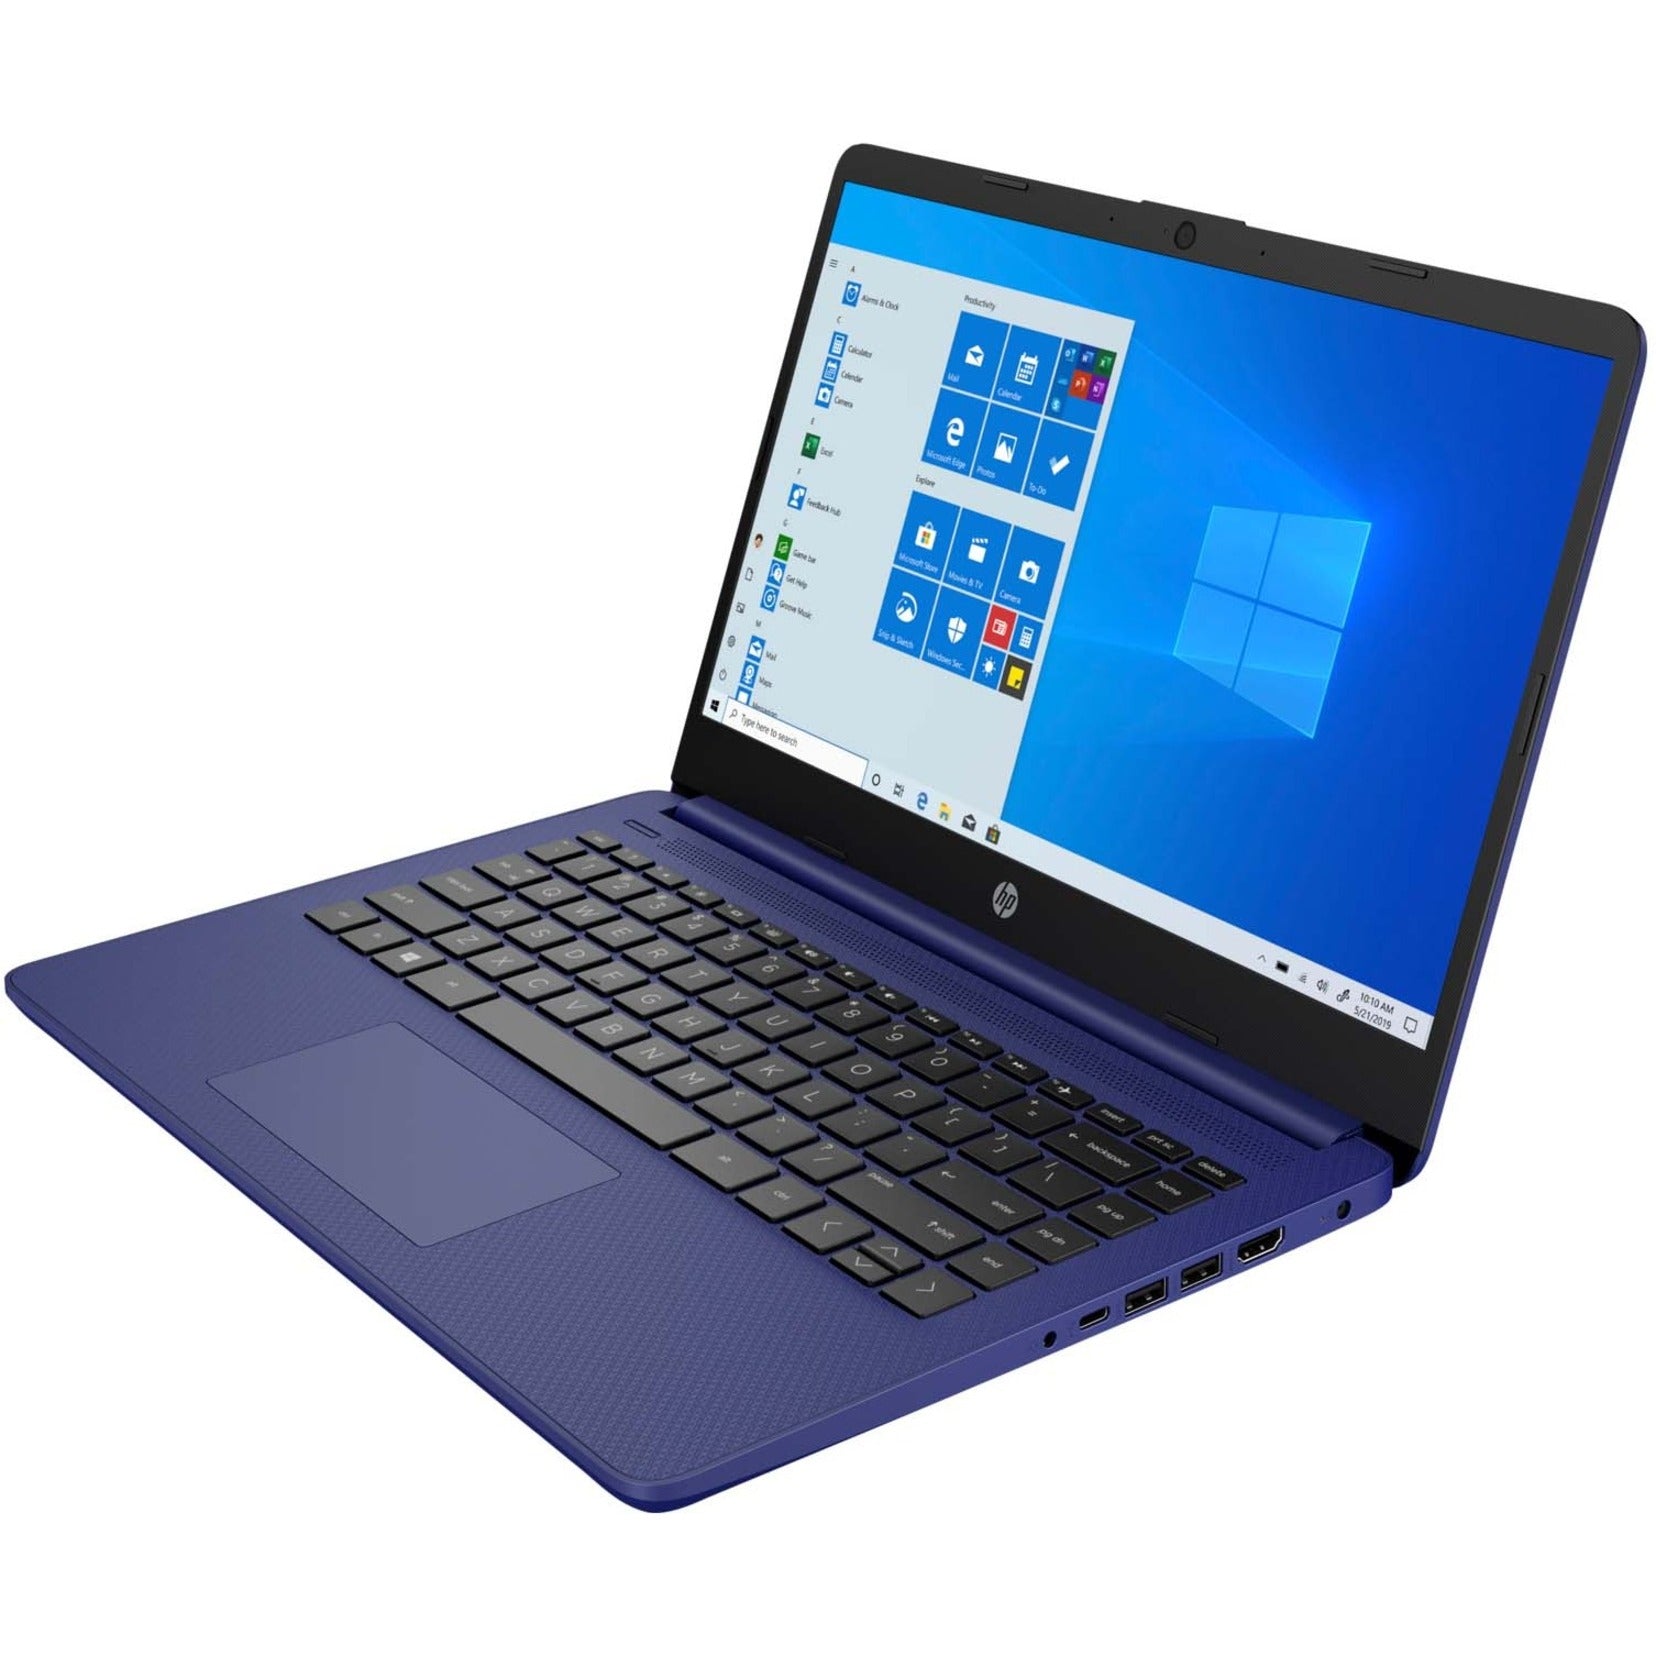 HP Laptop 14-dq0050nr 14" Touchscreen Notebook, Intel Celeron N4020, 4GB RAM, 64GB Flash Memory, Windows 10 Home in S mode